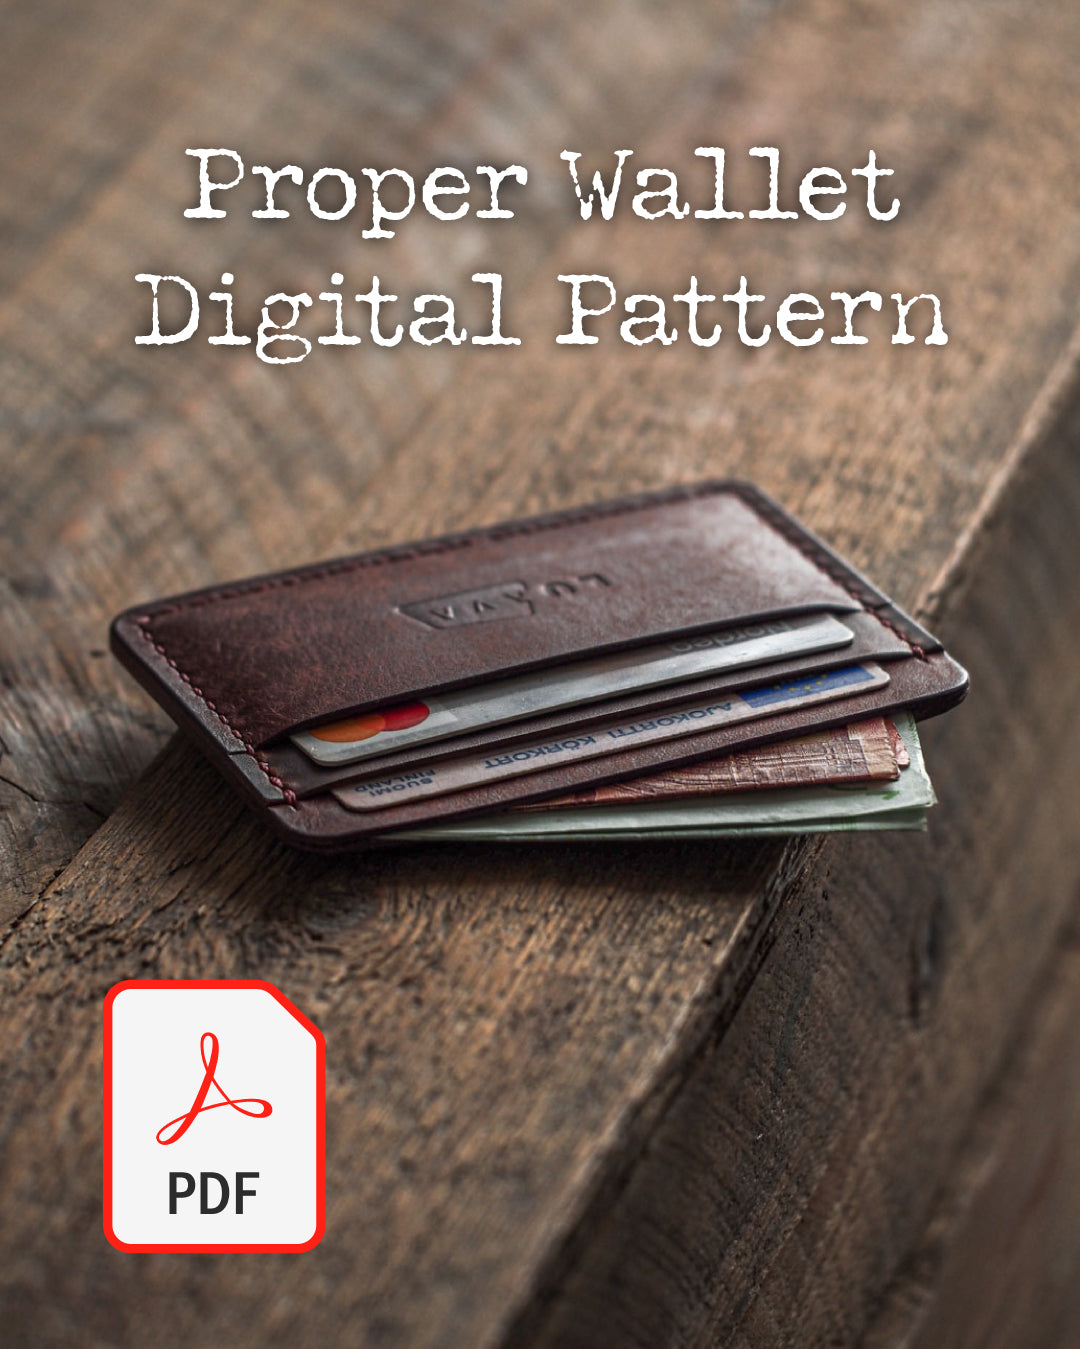 Proper wallet digital template sample image front in use